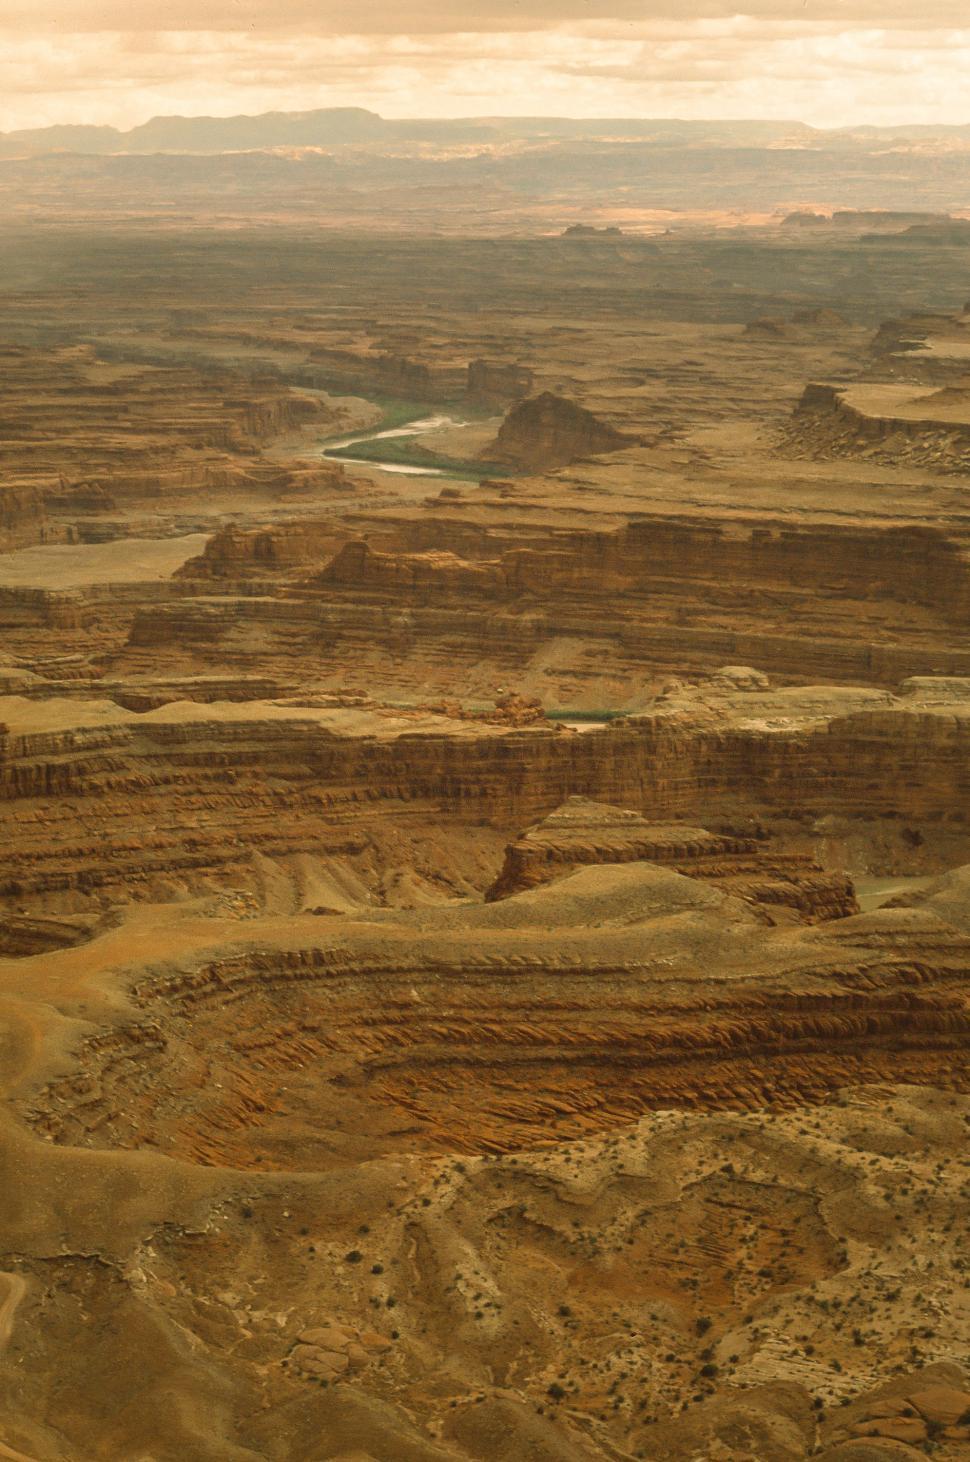 Free Image of Canyonlands 